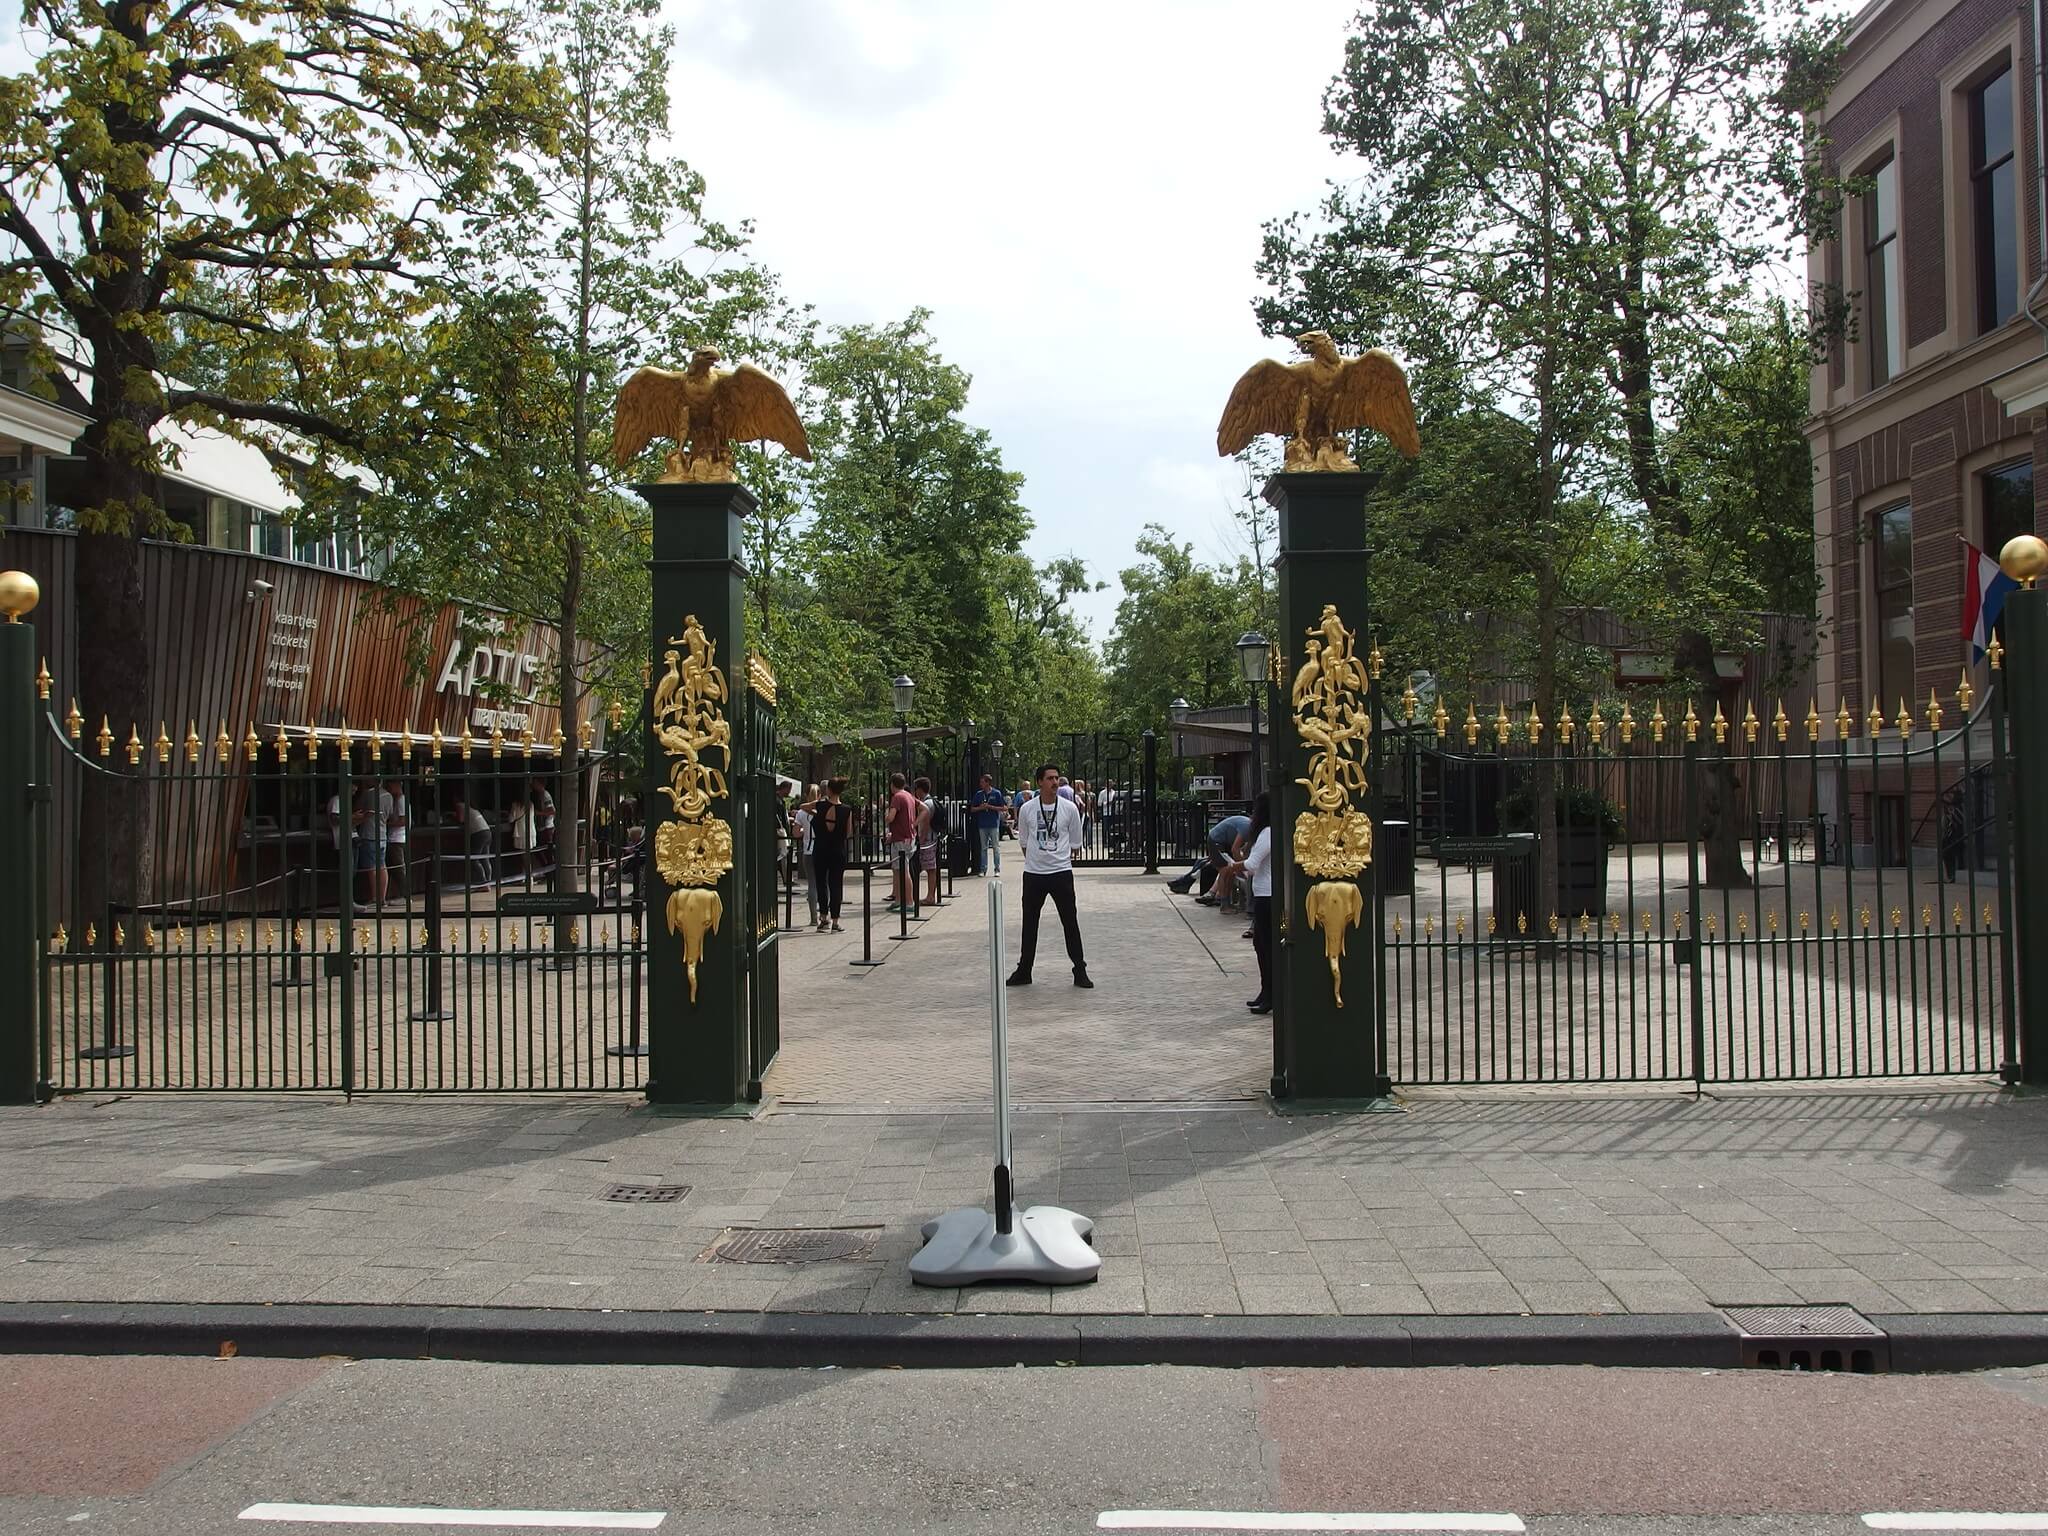 ARTIS Amsterdam Royal Zoo